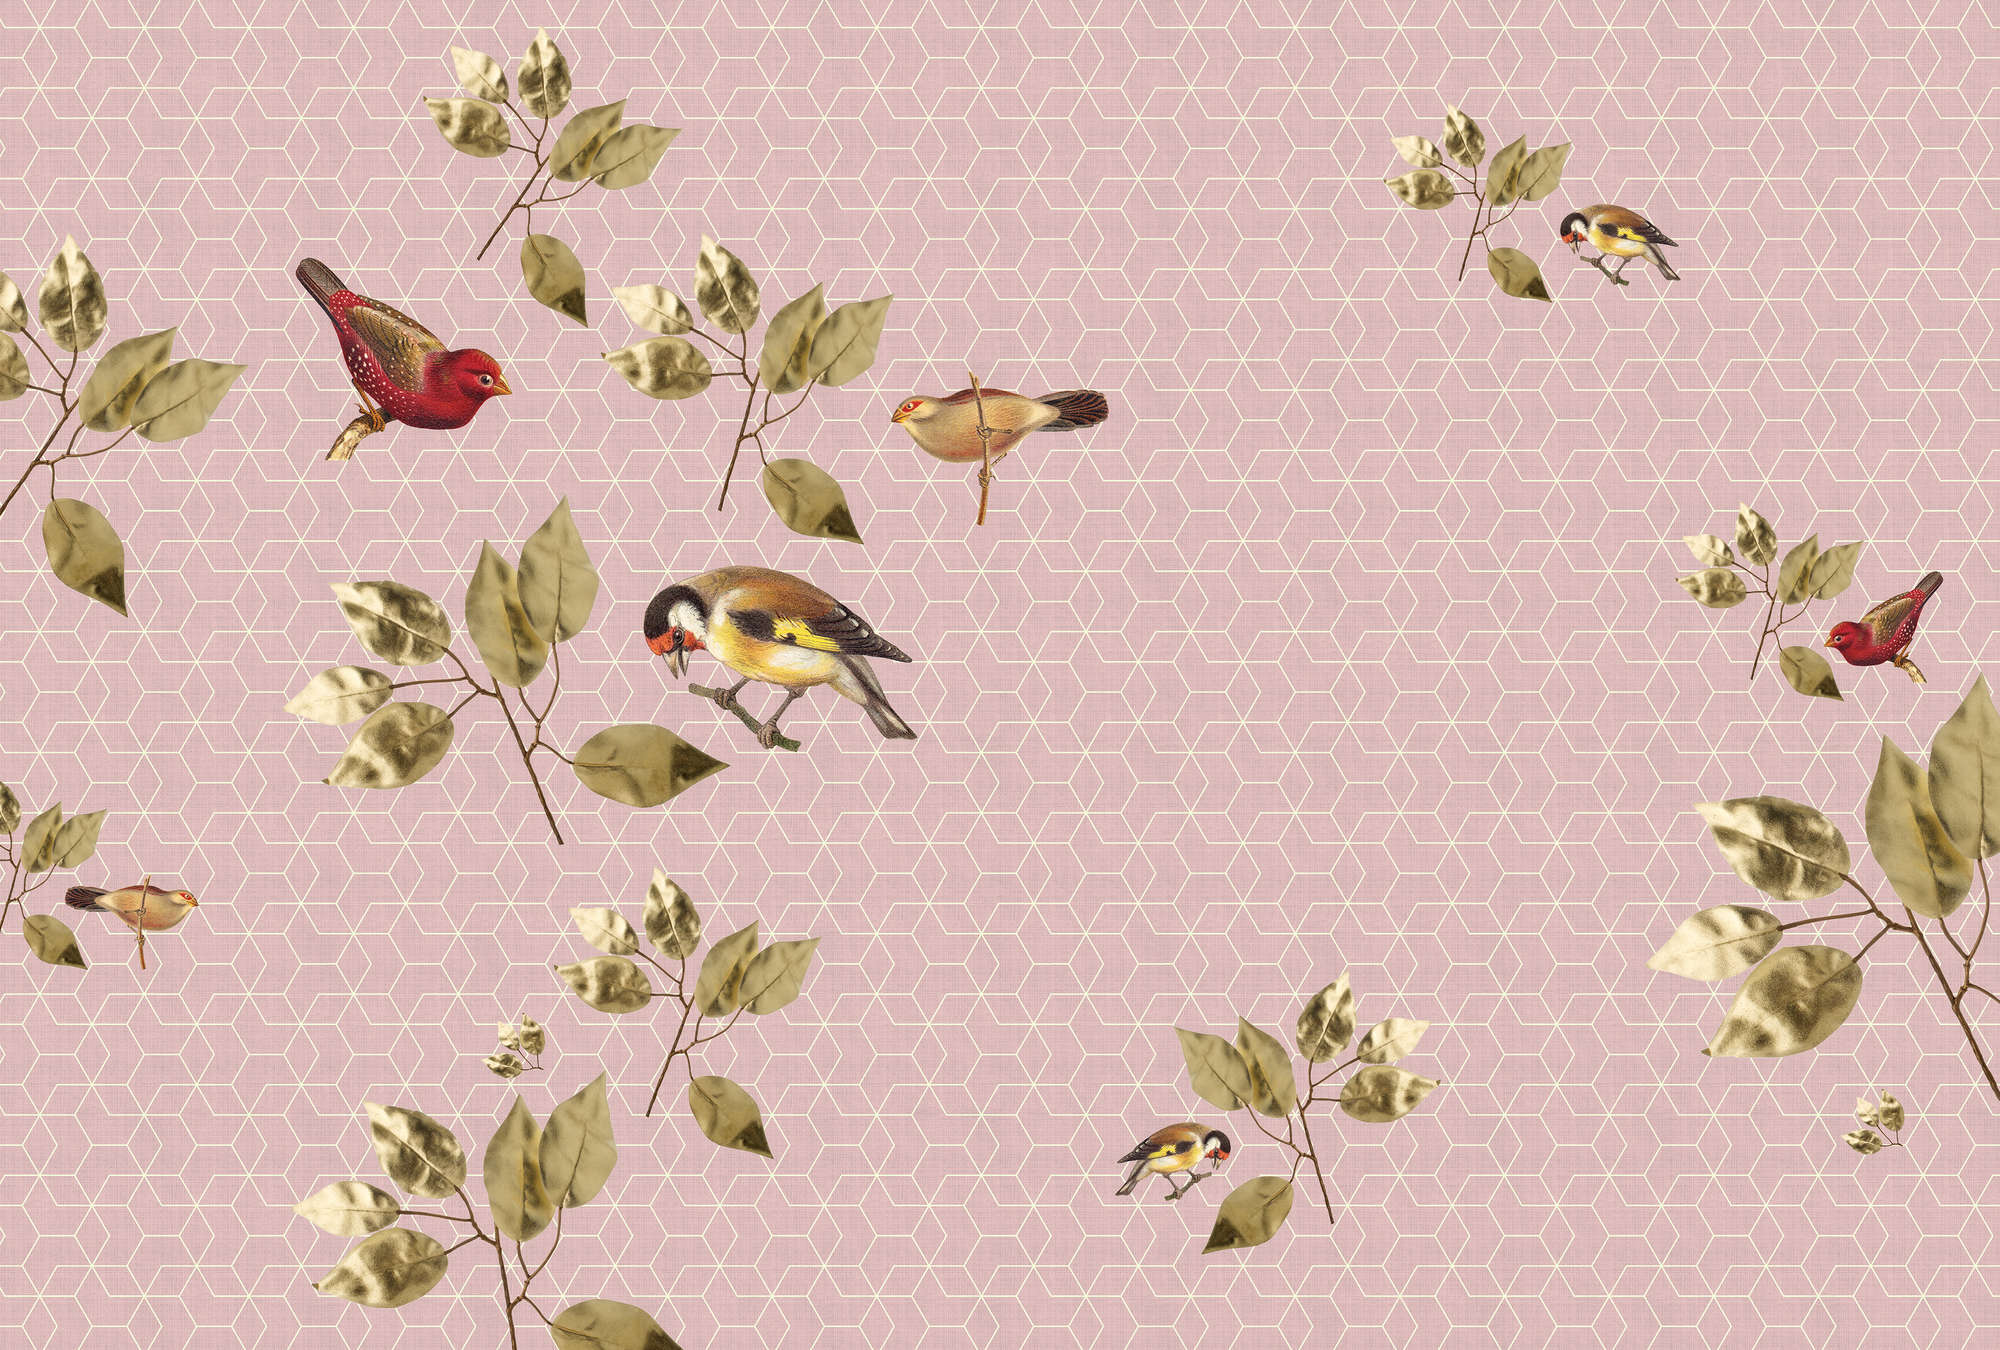             Brillant Birds 1 - Geometrie Fototapete mit Vogel & Blätter Muster – Grün, Rosa | Mattes Glattvlies
        